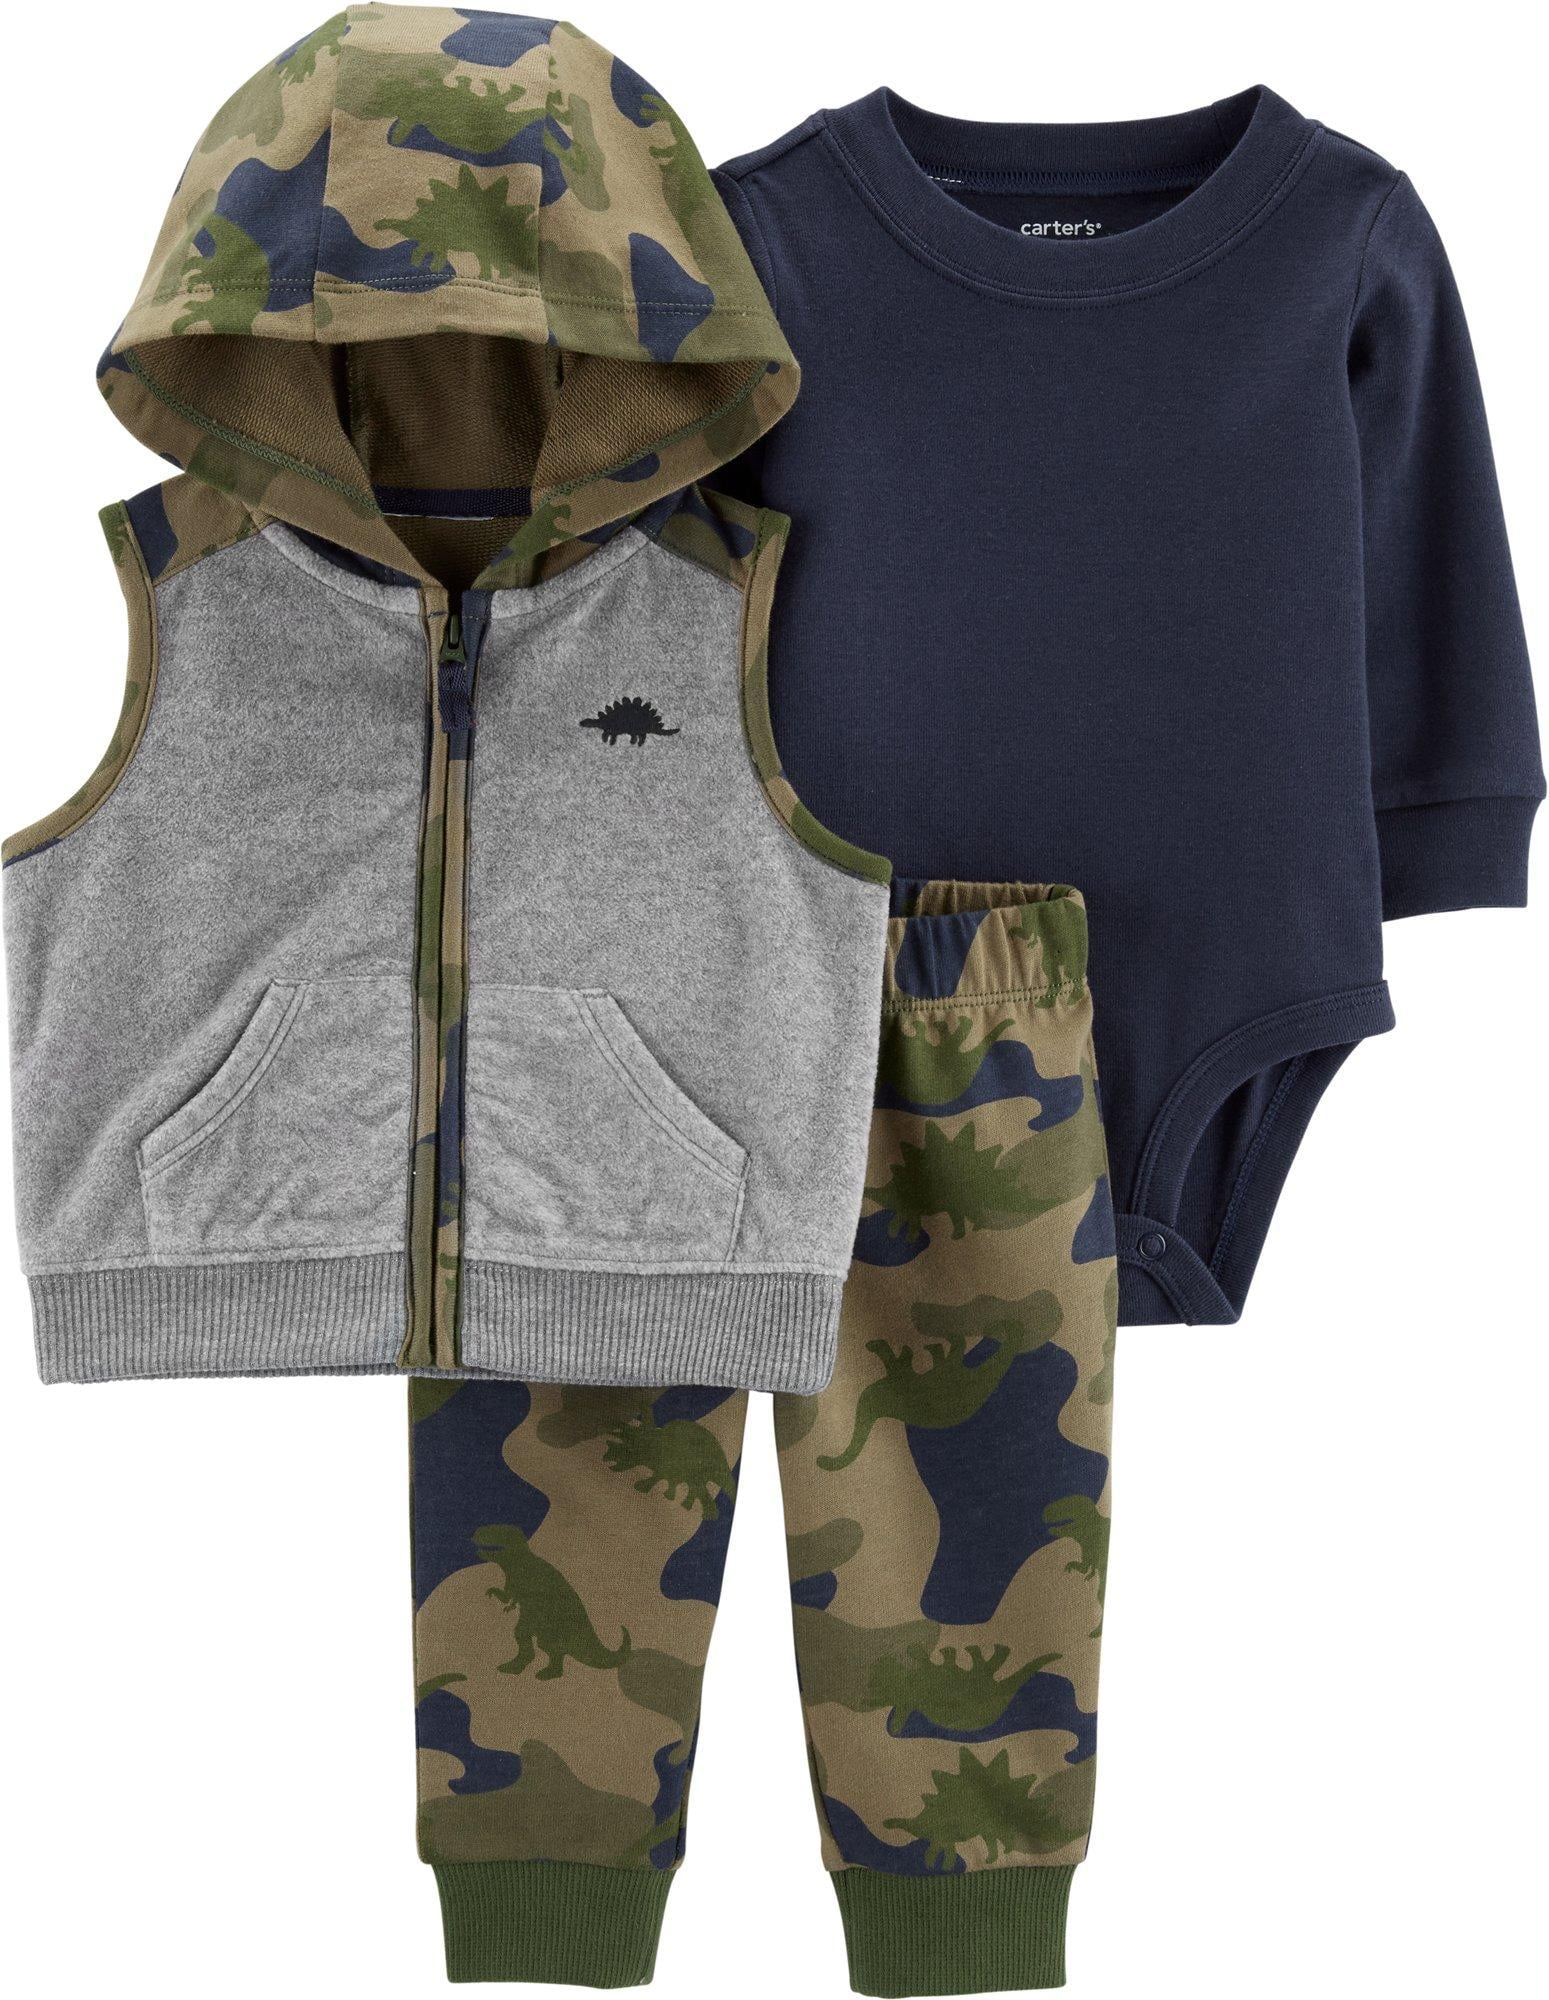 NEW Baby Boys 3 pc Outfit 3-6 Mos Bodysuit Pants Bib Set Blue Camouflage Hunt 